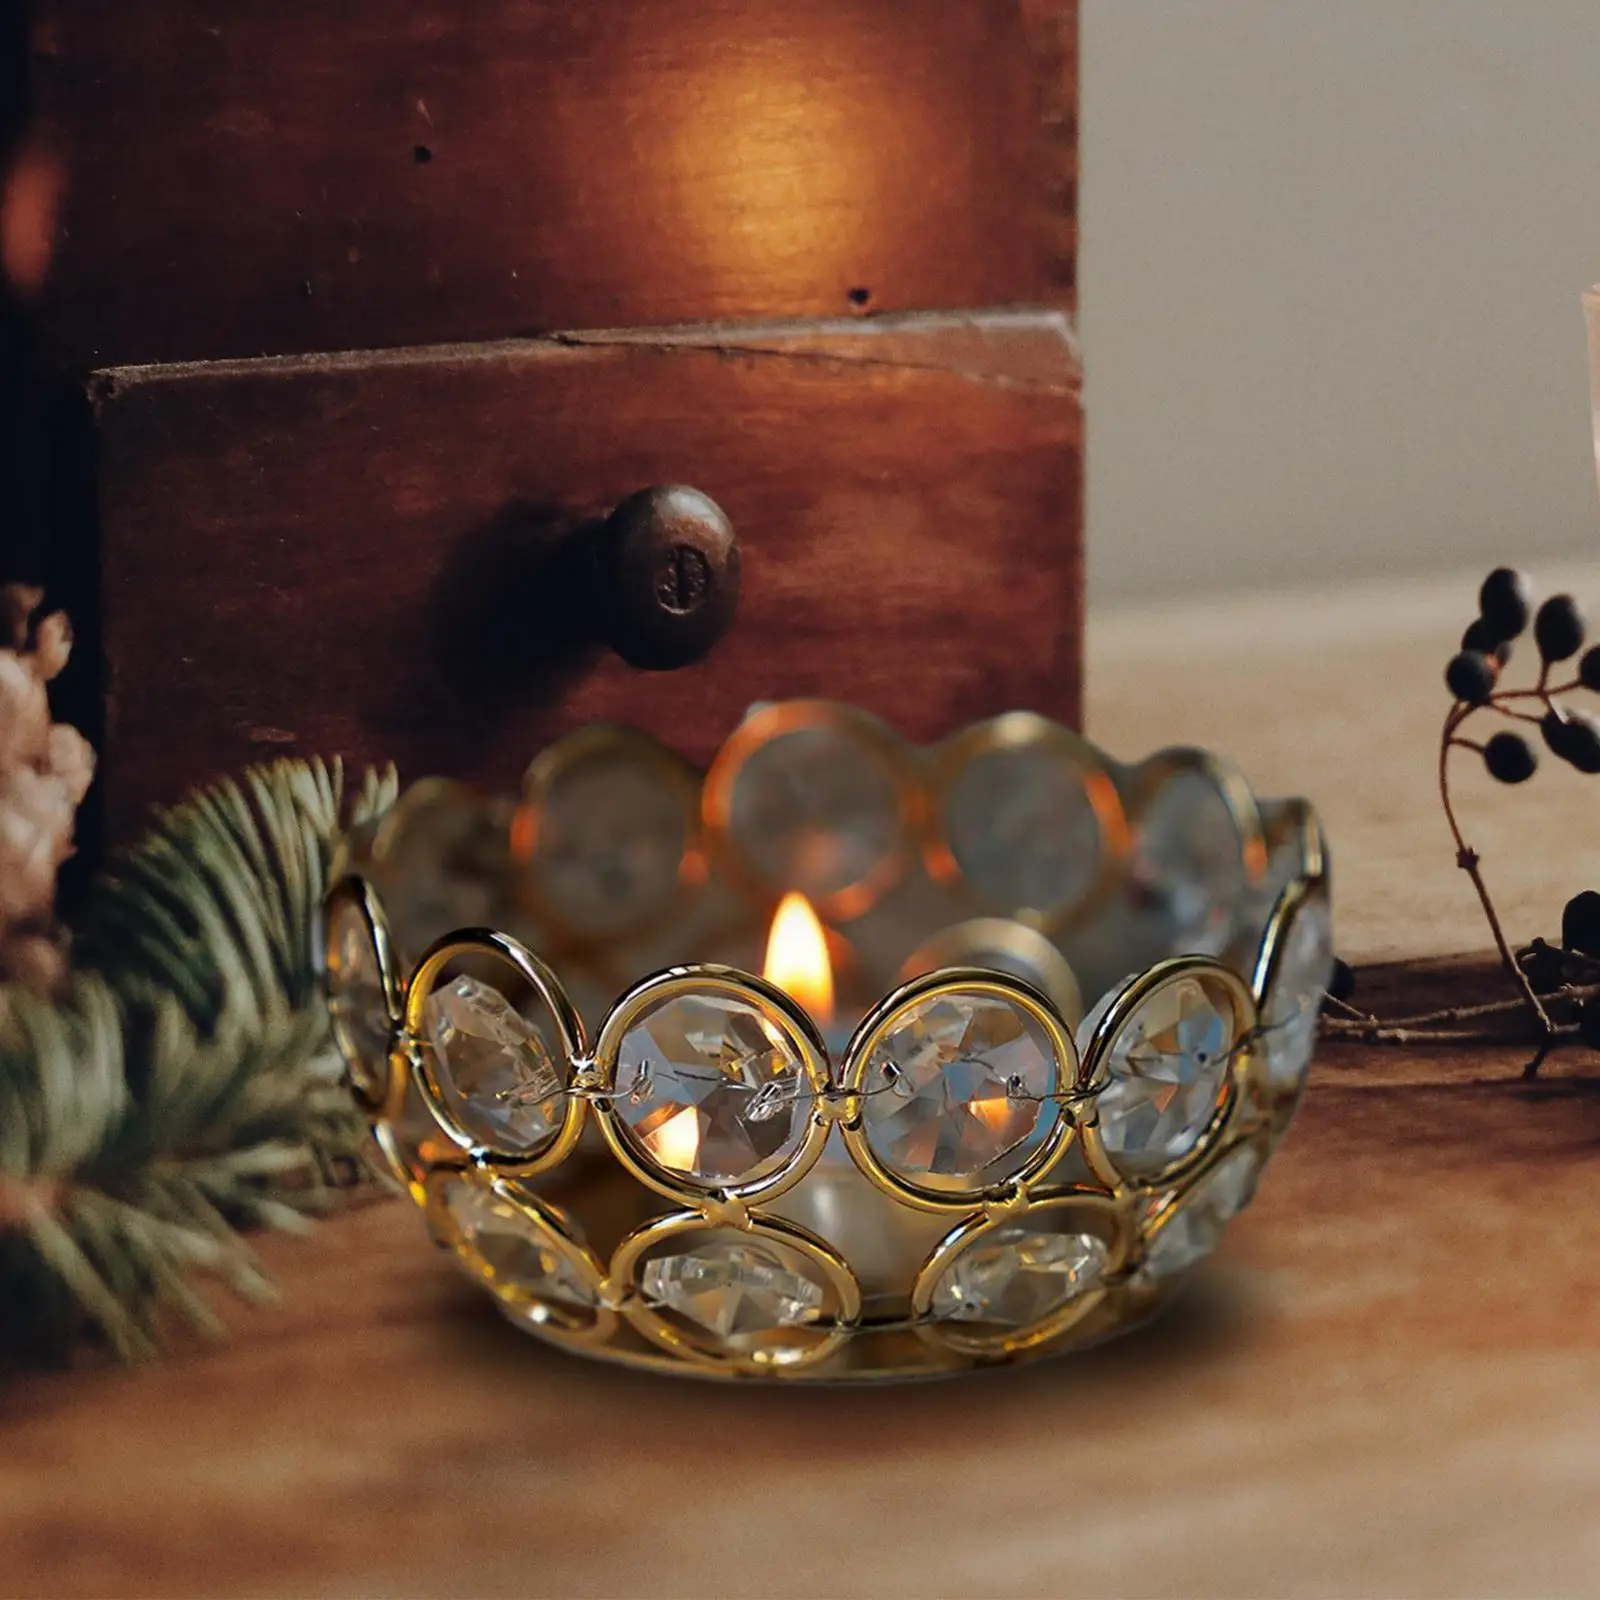 Candlestick Tea Light Candle Holder Garden or Party Decor Decoration Elegant